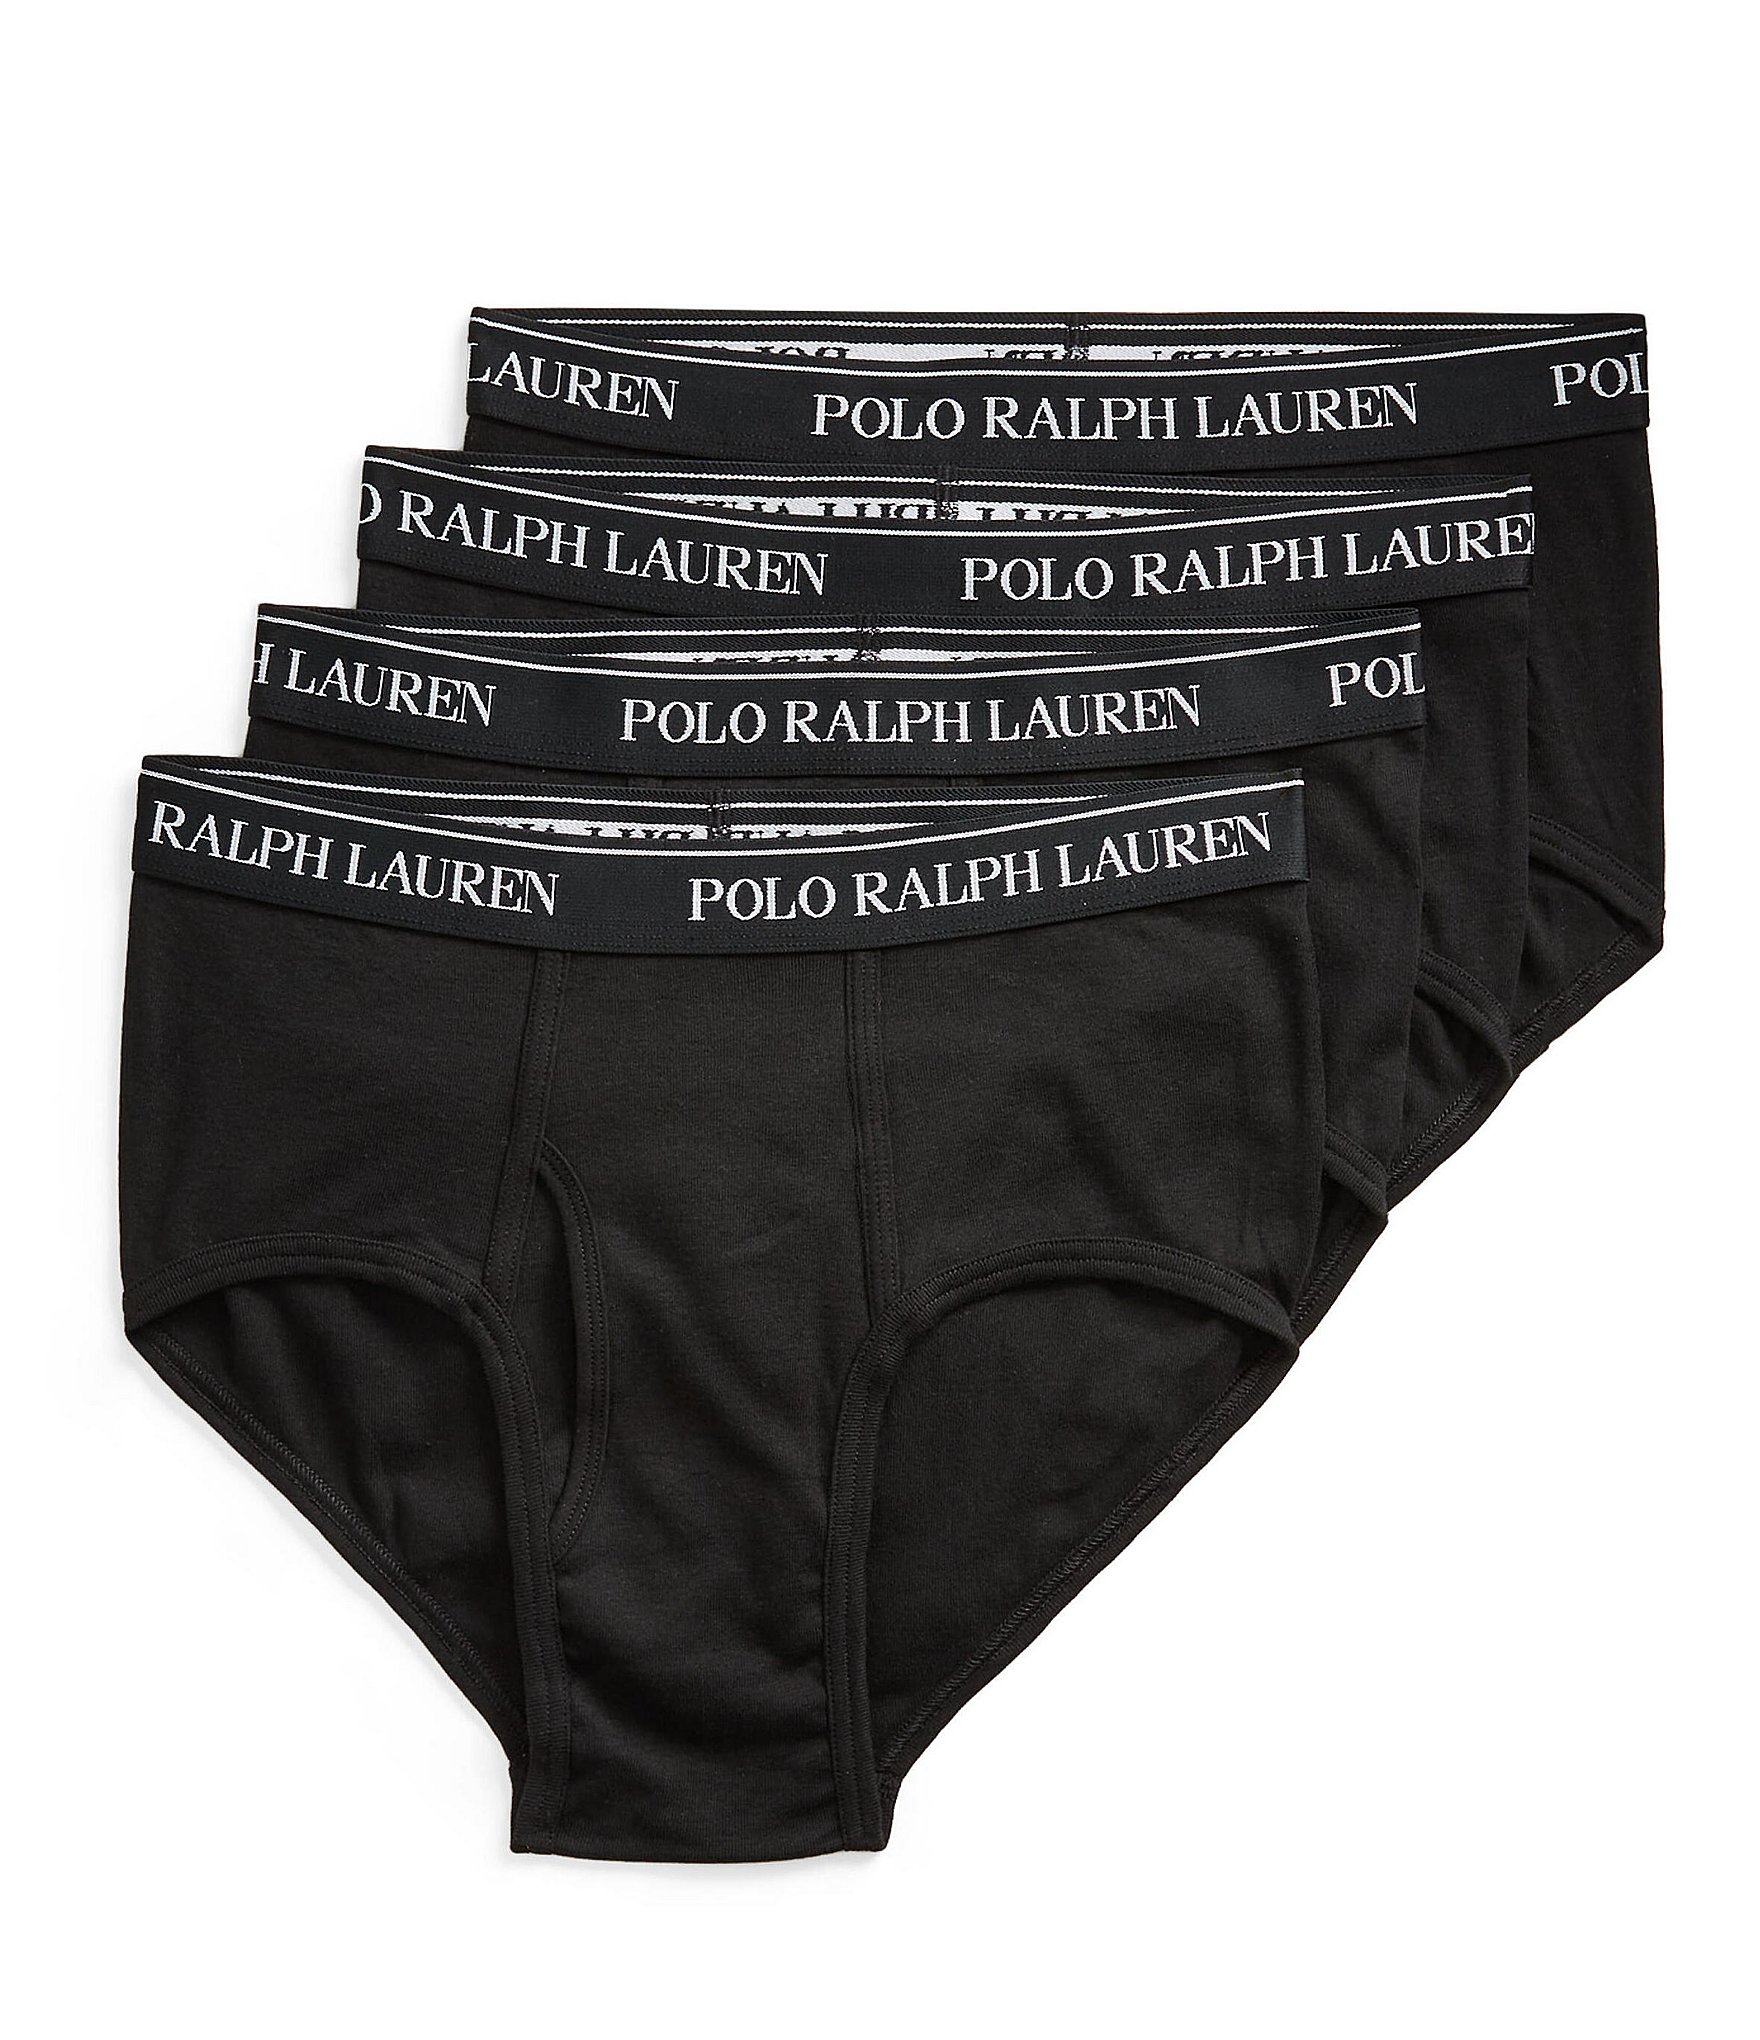 POLO RALPH LAUREN Intimates 4 Pack White Classic Fit Underwear Briefs XL